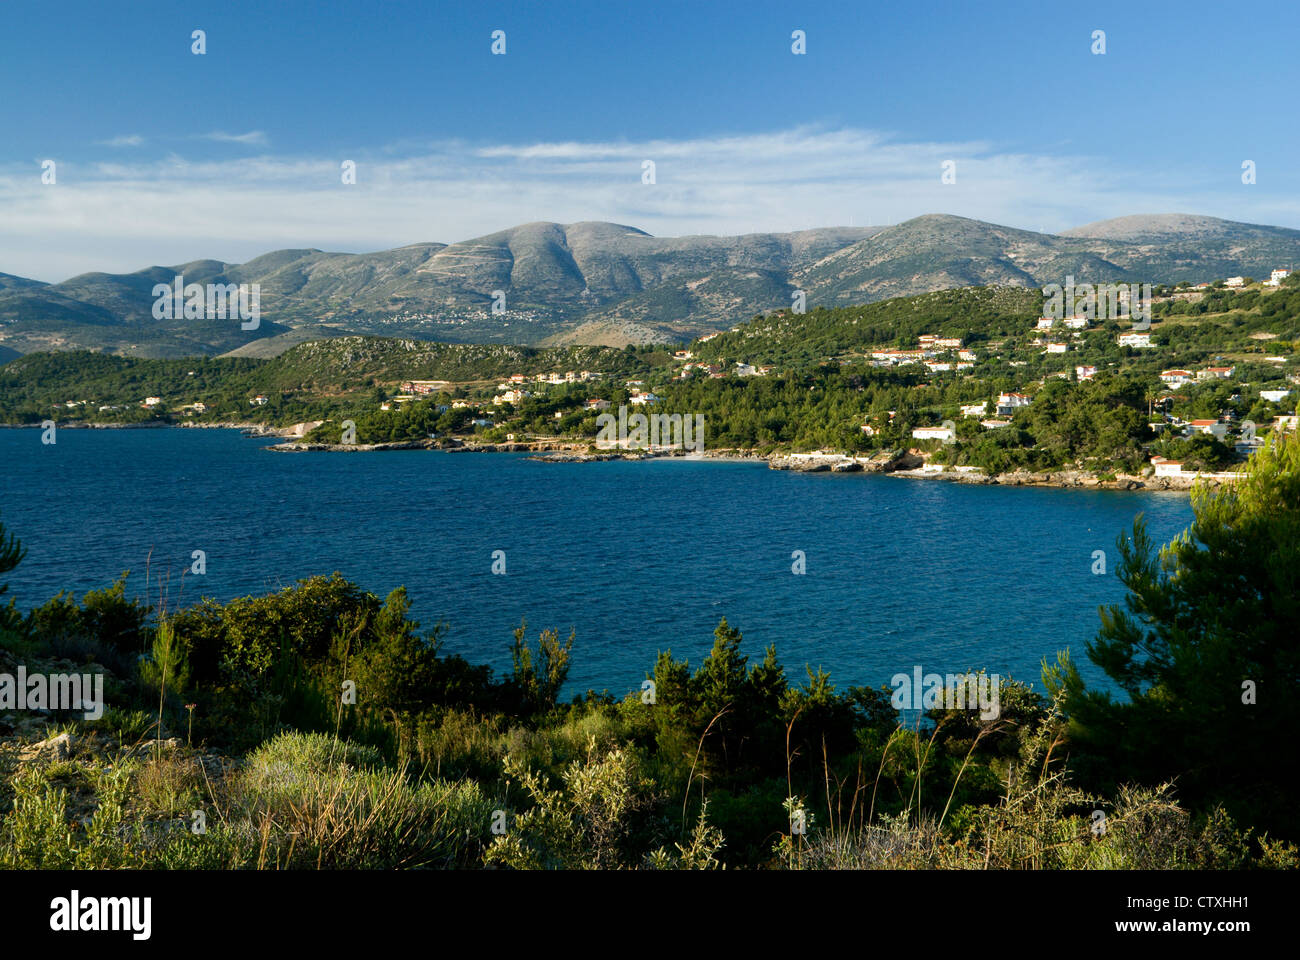 View across Lassi towards the mountains, Argostoli, Kefalonia, Ionian Islands, Greece. Stock Photo